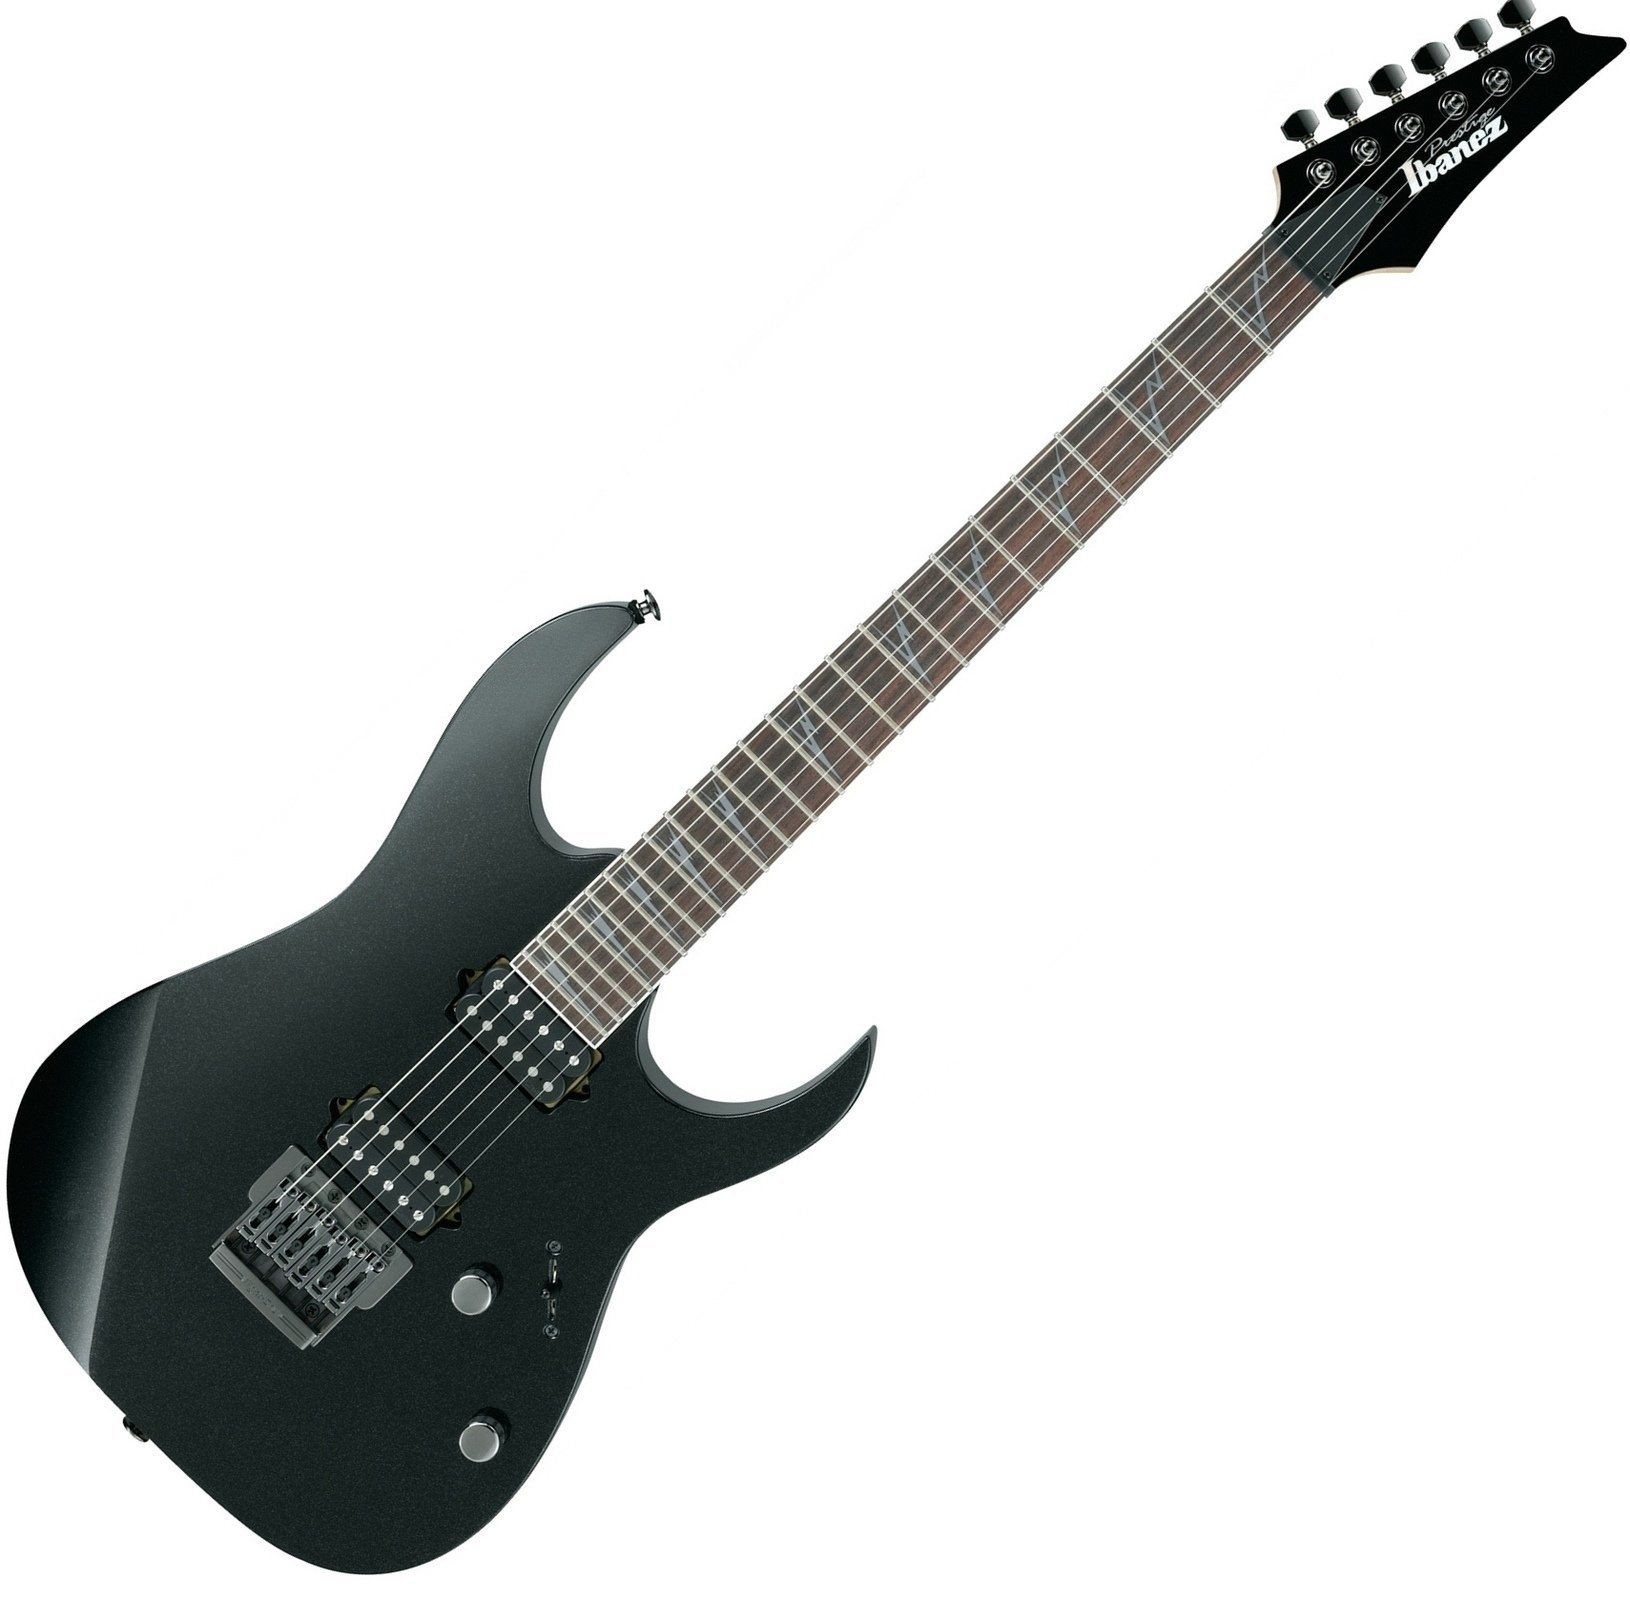 Elektrisk gitarr Ibanez RG 3521 Galaxy Black